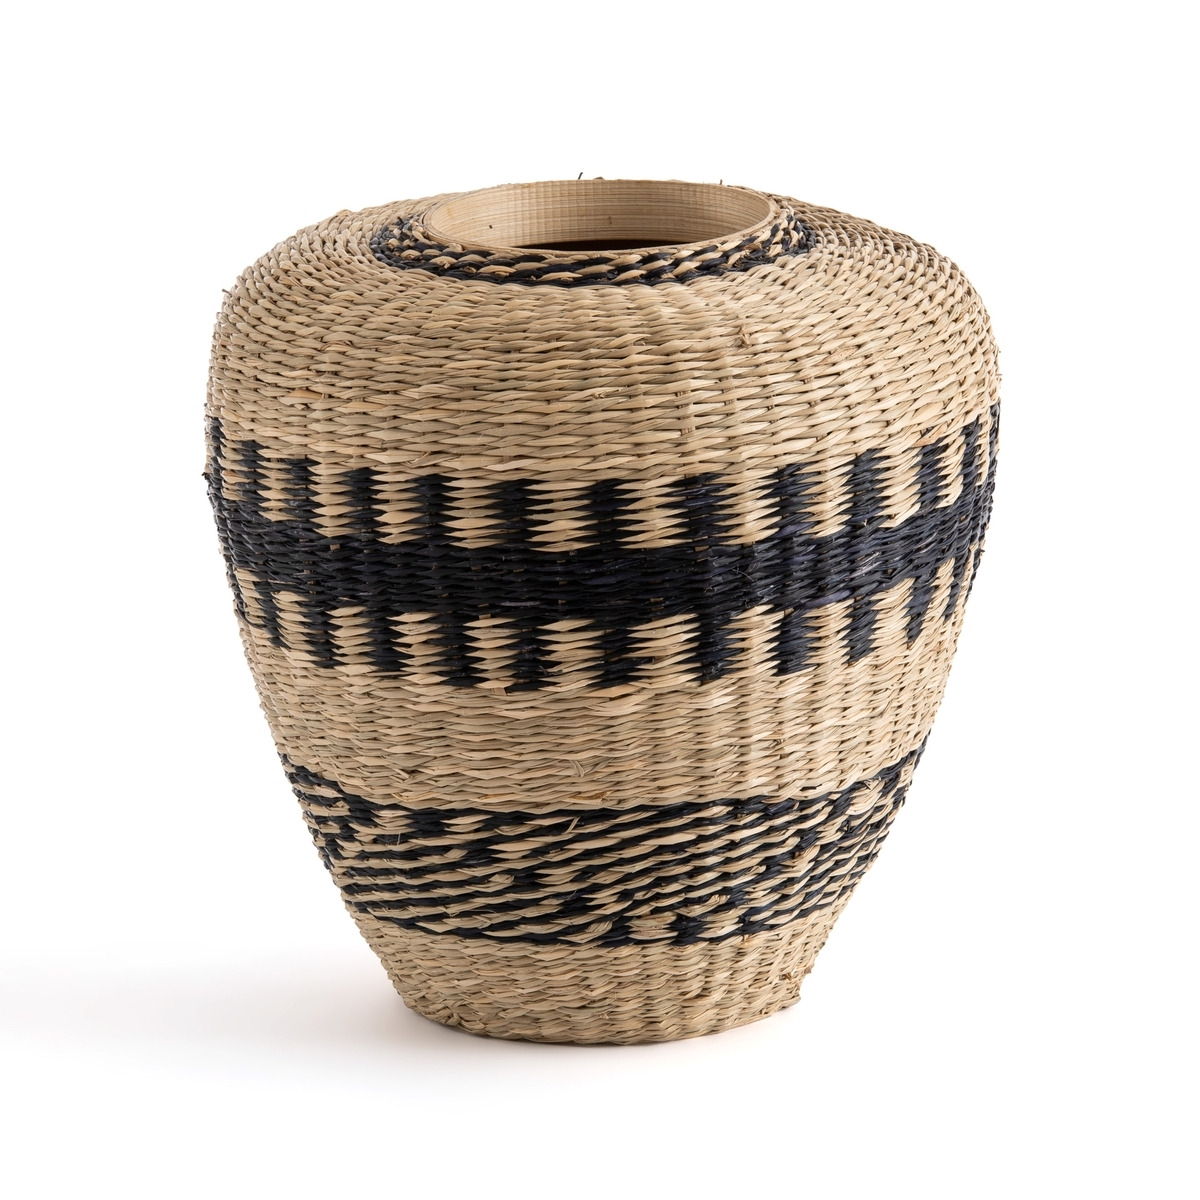 Plooming 33cm High Wicker & Bamboo Decorative Vase - image 1